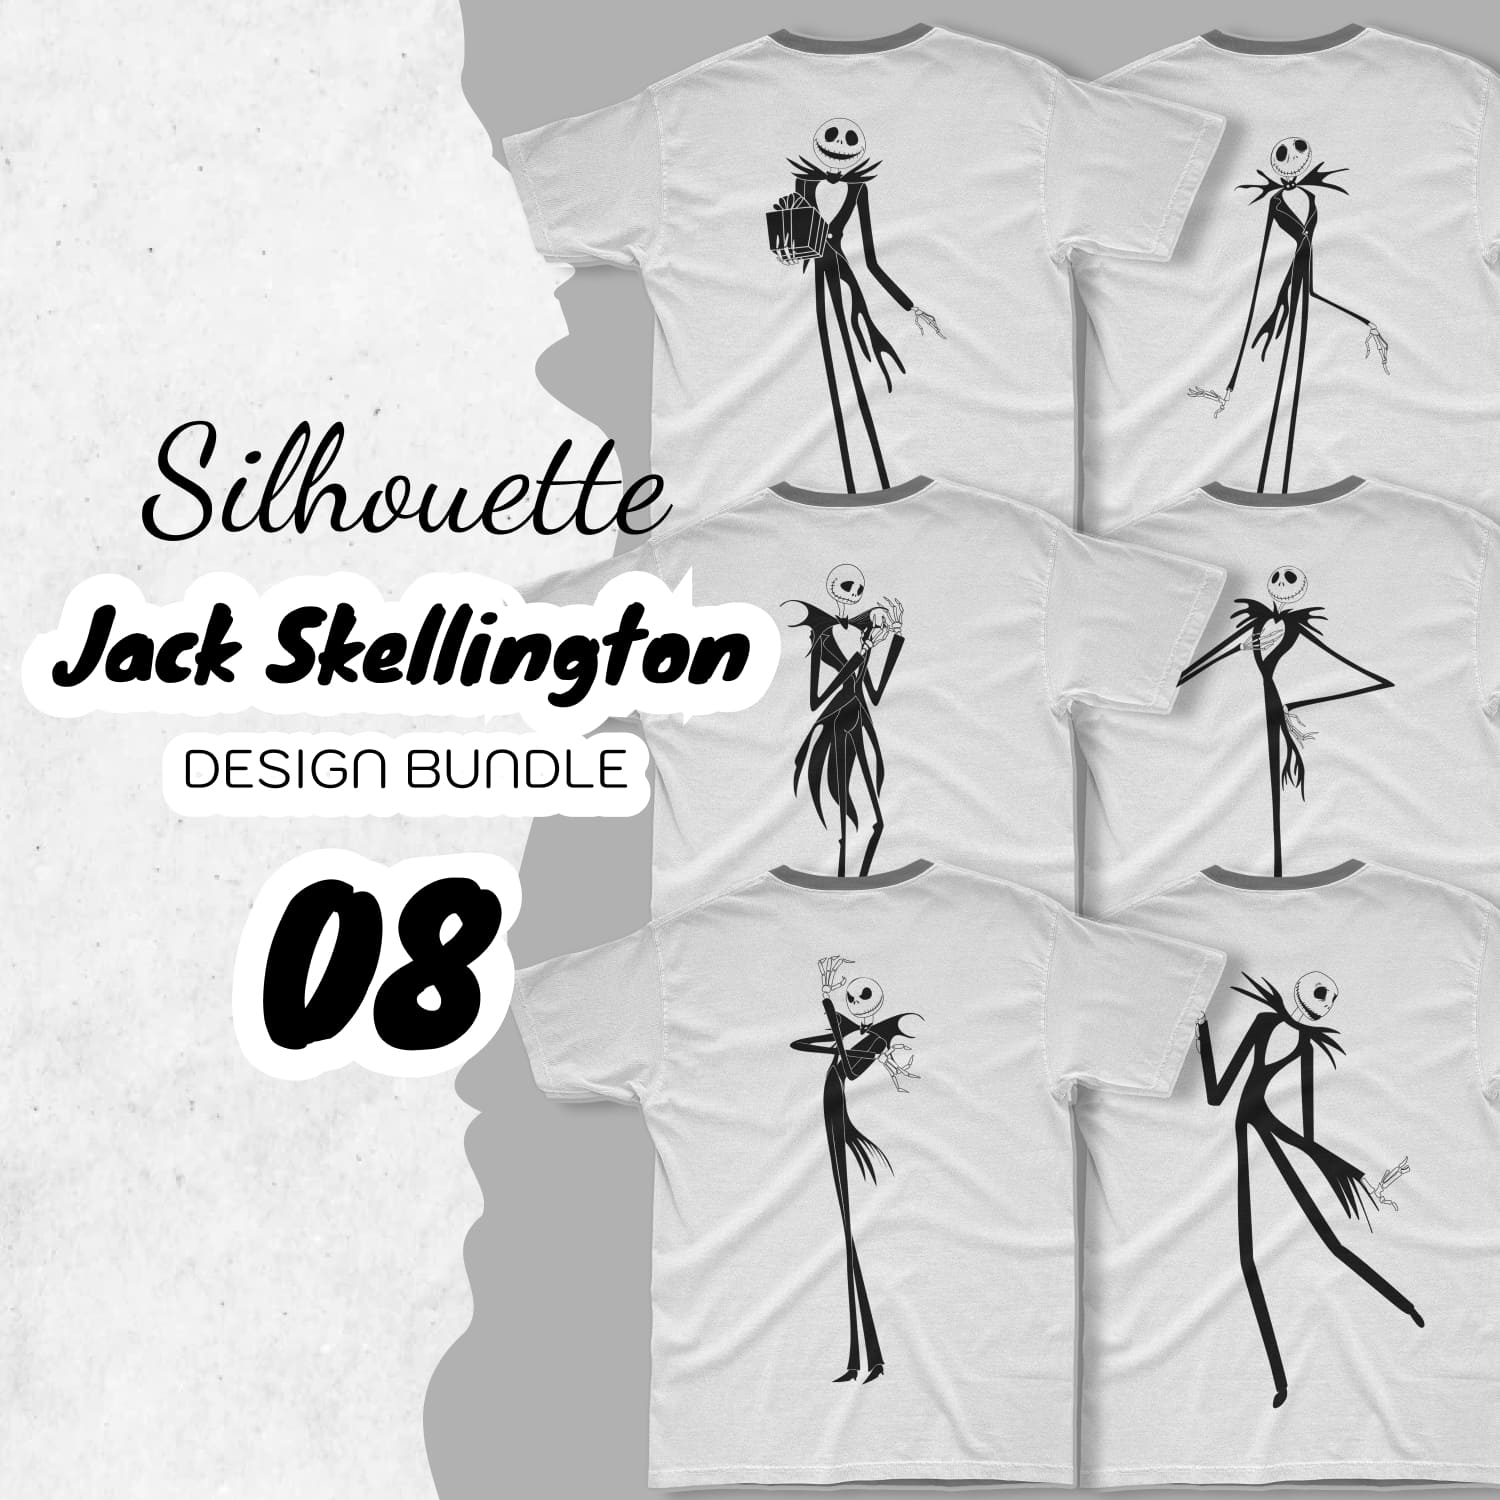 Silhouette Jack Skellington SVG - main image preview.